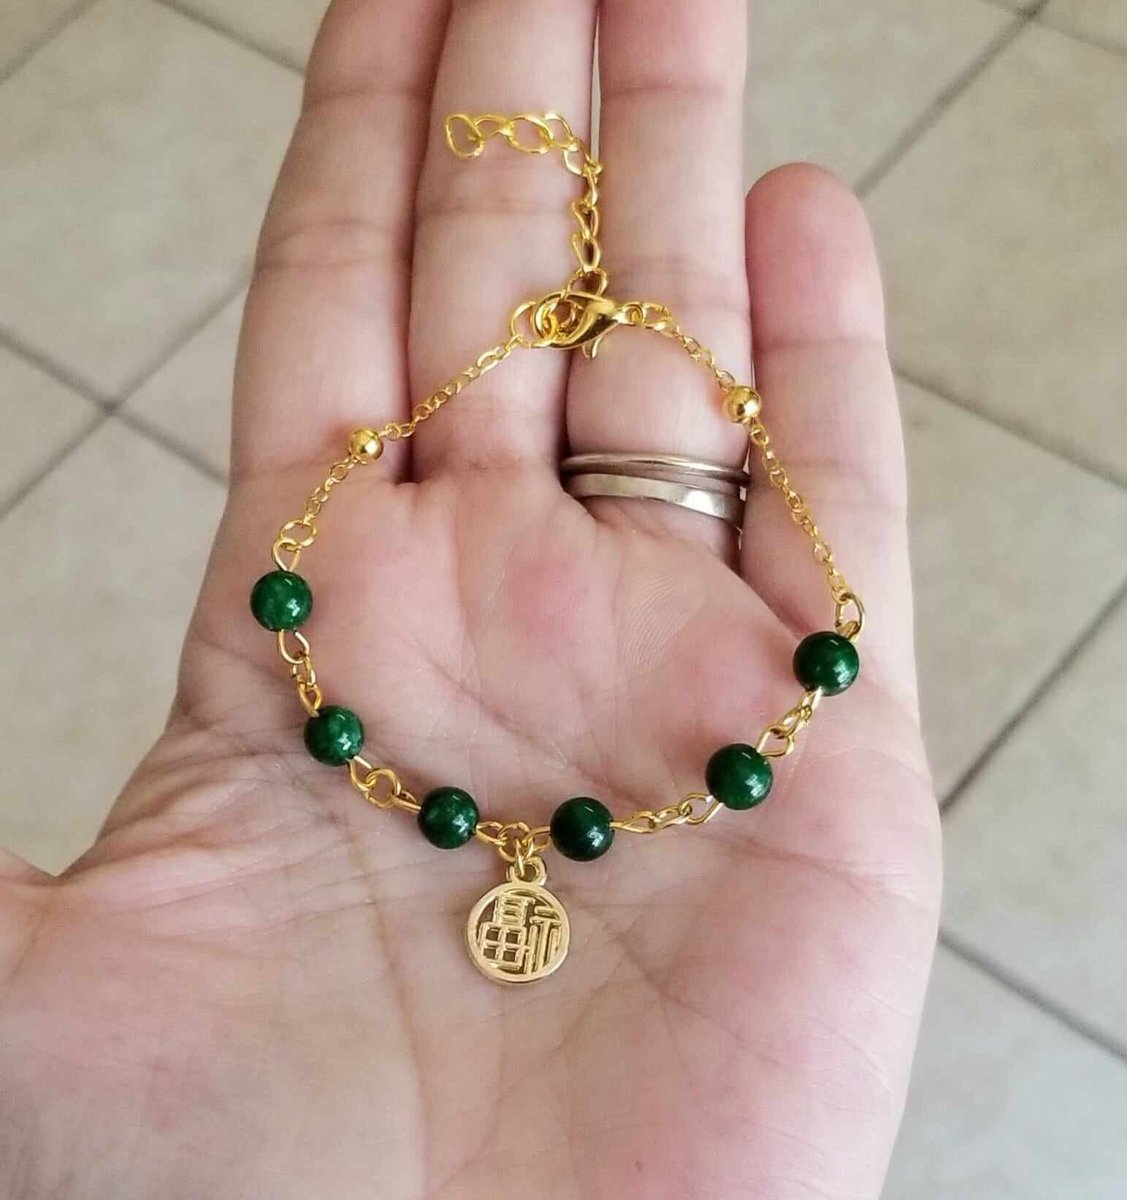 Gold Jade Bracelet 

#jewelry #bracelet #jade #jadebracelet #jadejewelry #beadedbracelet #goodluck  #giftsforher #giftideas #gifts #mothersday #mothersdaygifts #graduationgift #etsy #etsyjewelry #handmade #handmadejewelry #handmadegift 

simplychicbyangela.etsy.com/listing/164916…